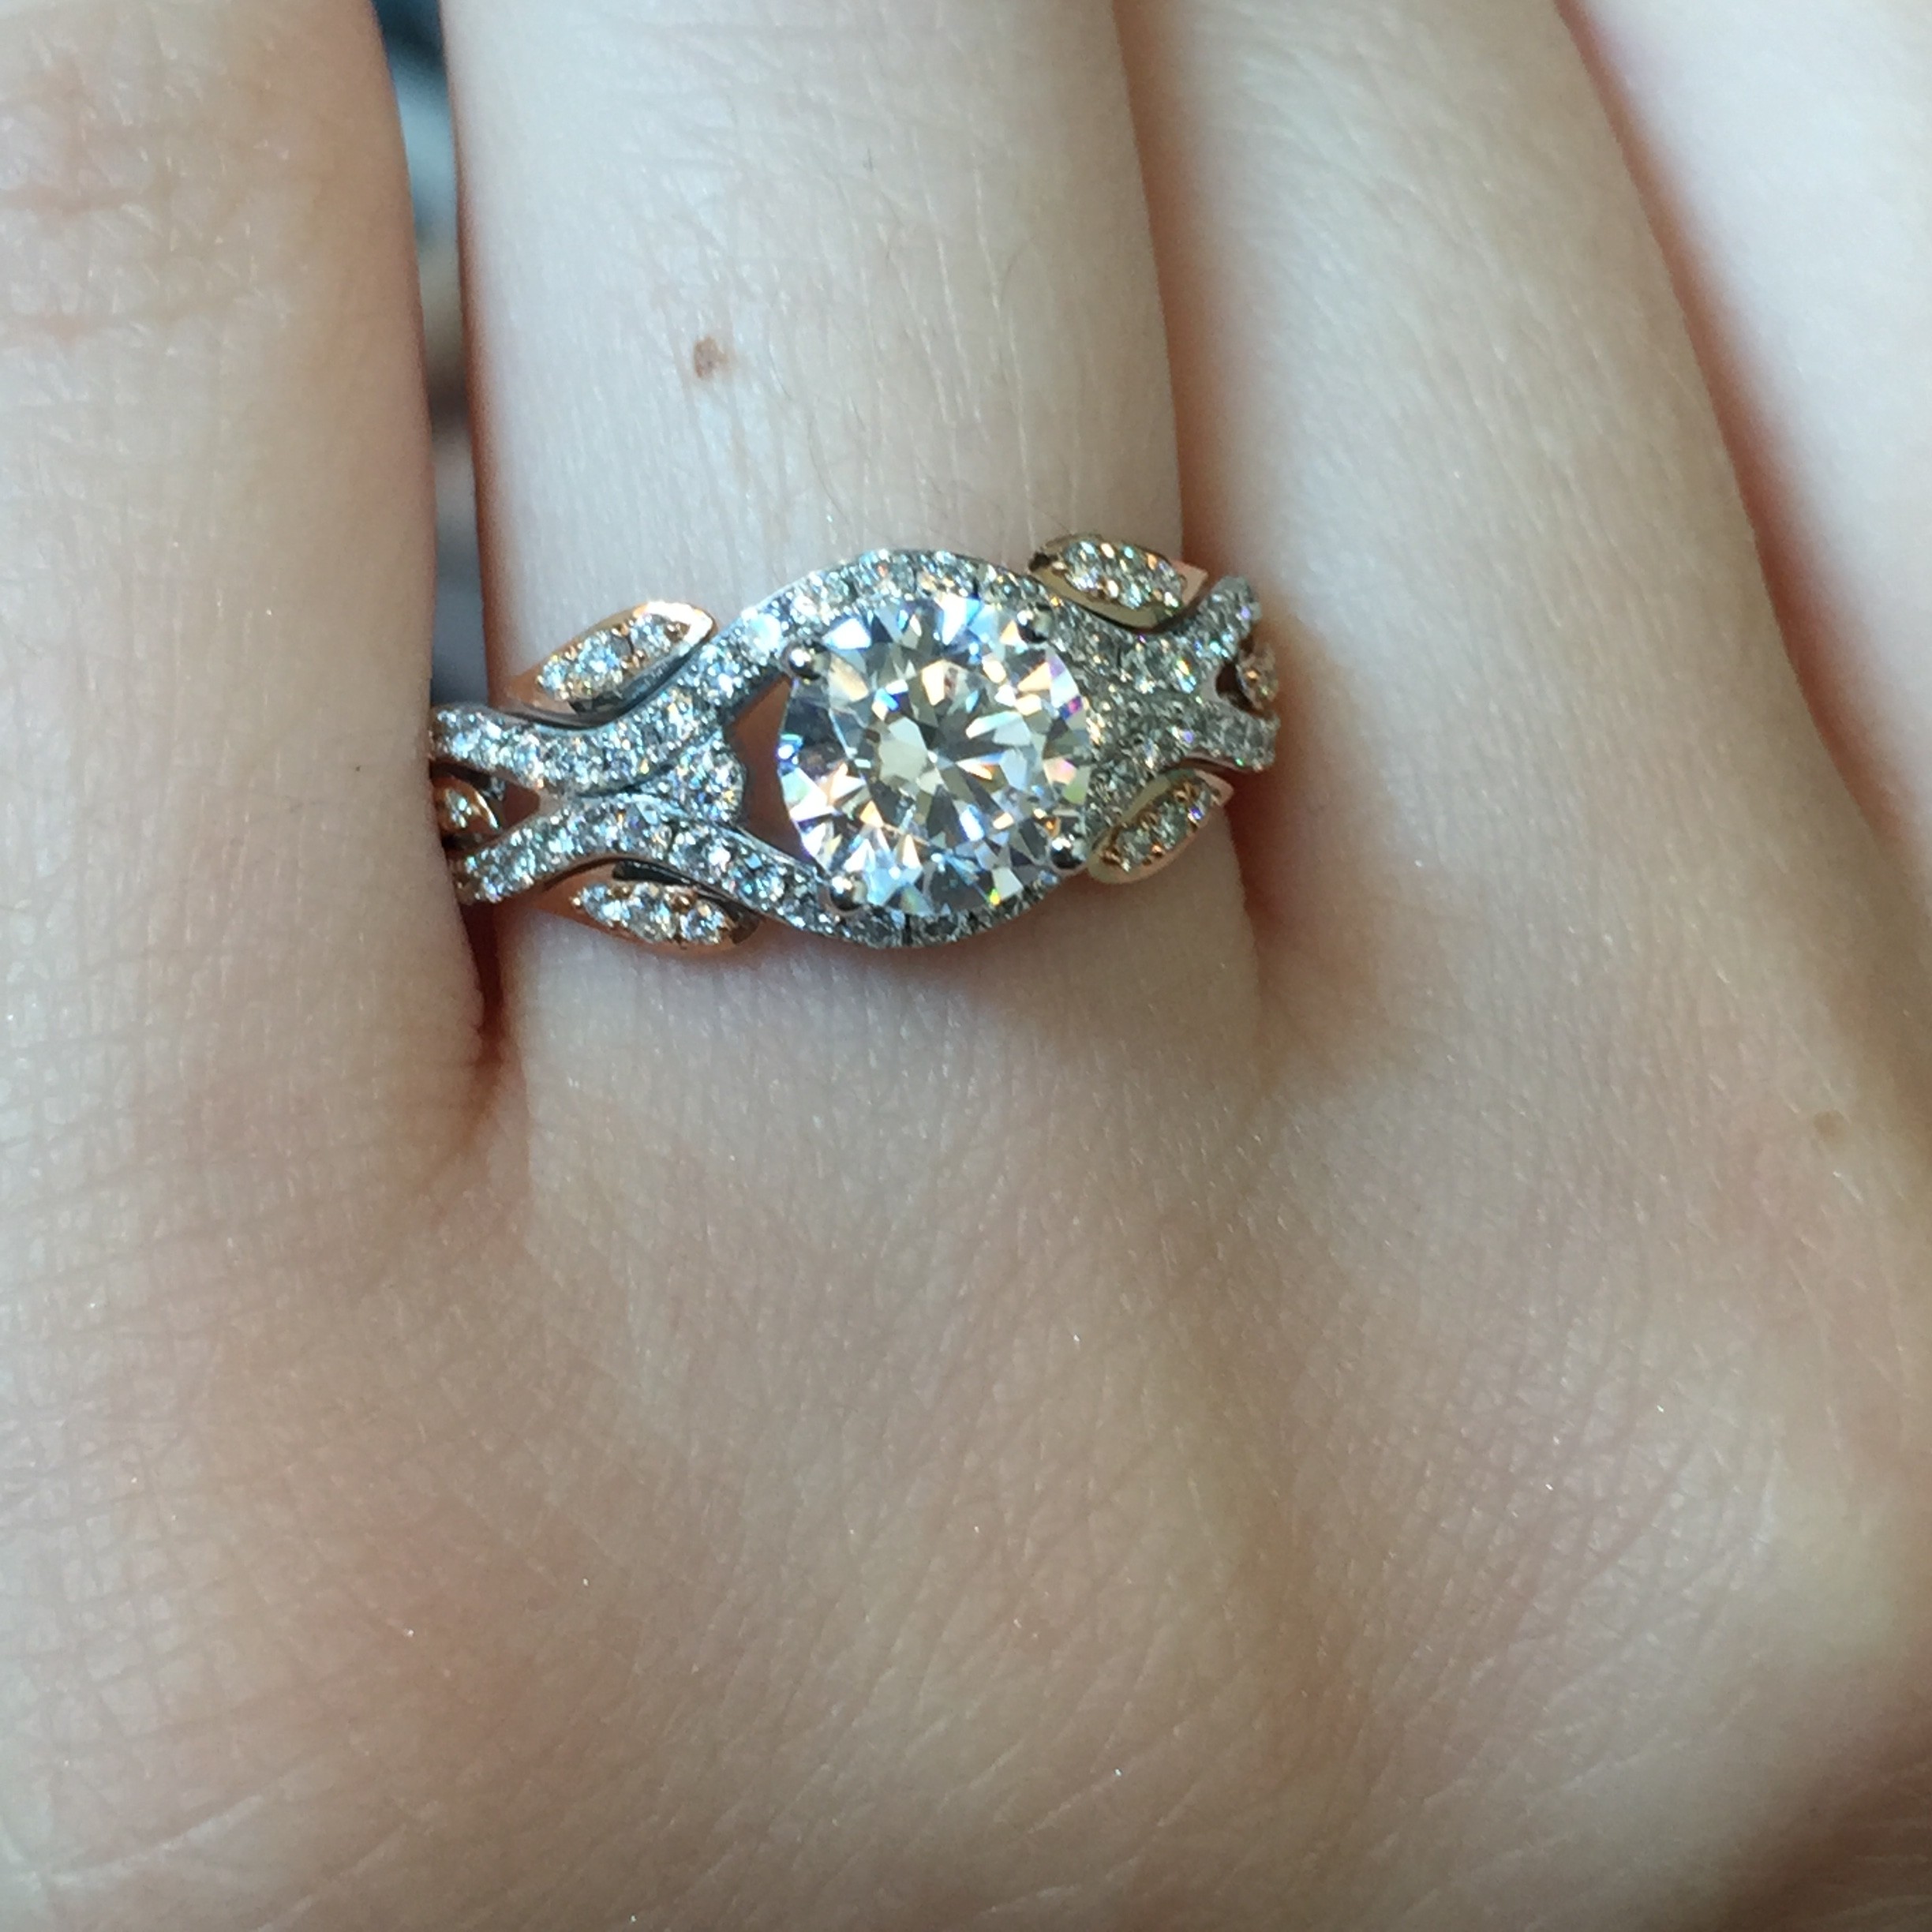 Rose gold Simon G engagement ring